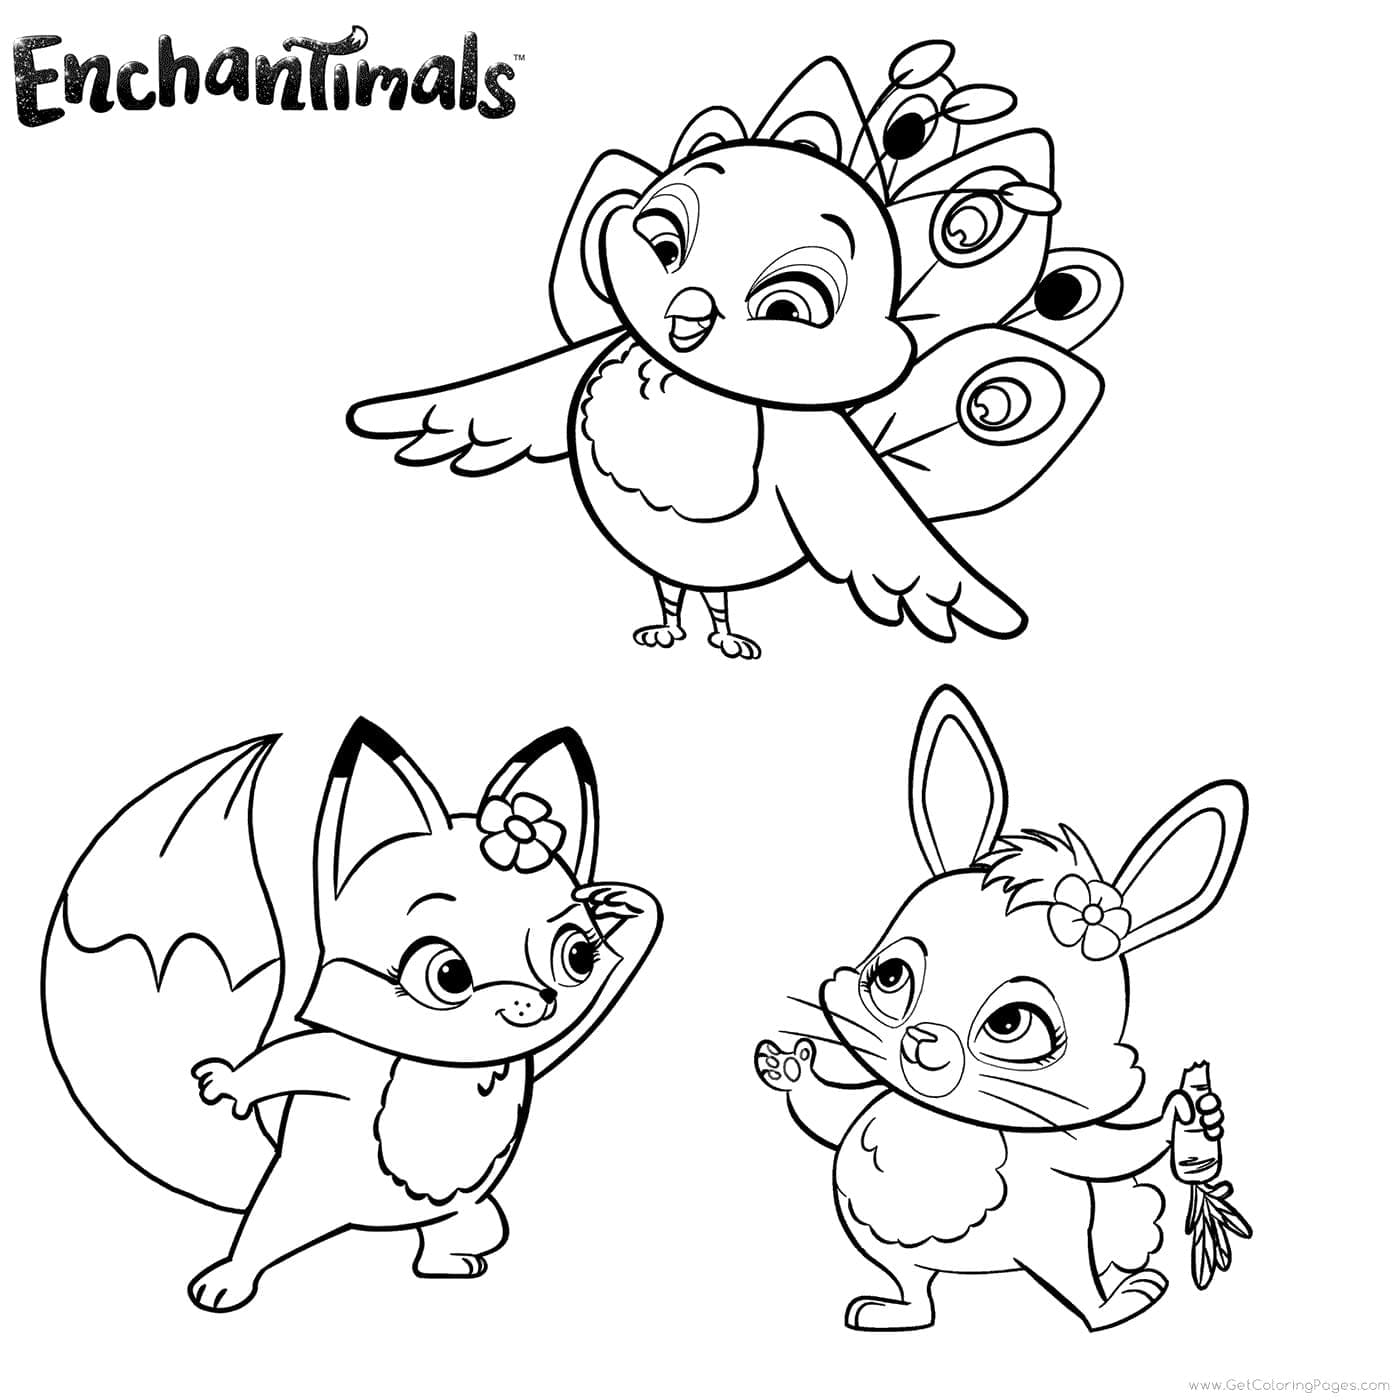 Enchantimals Animals